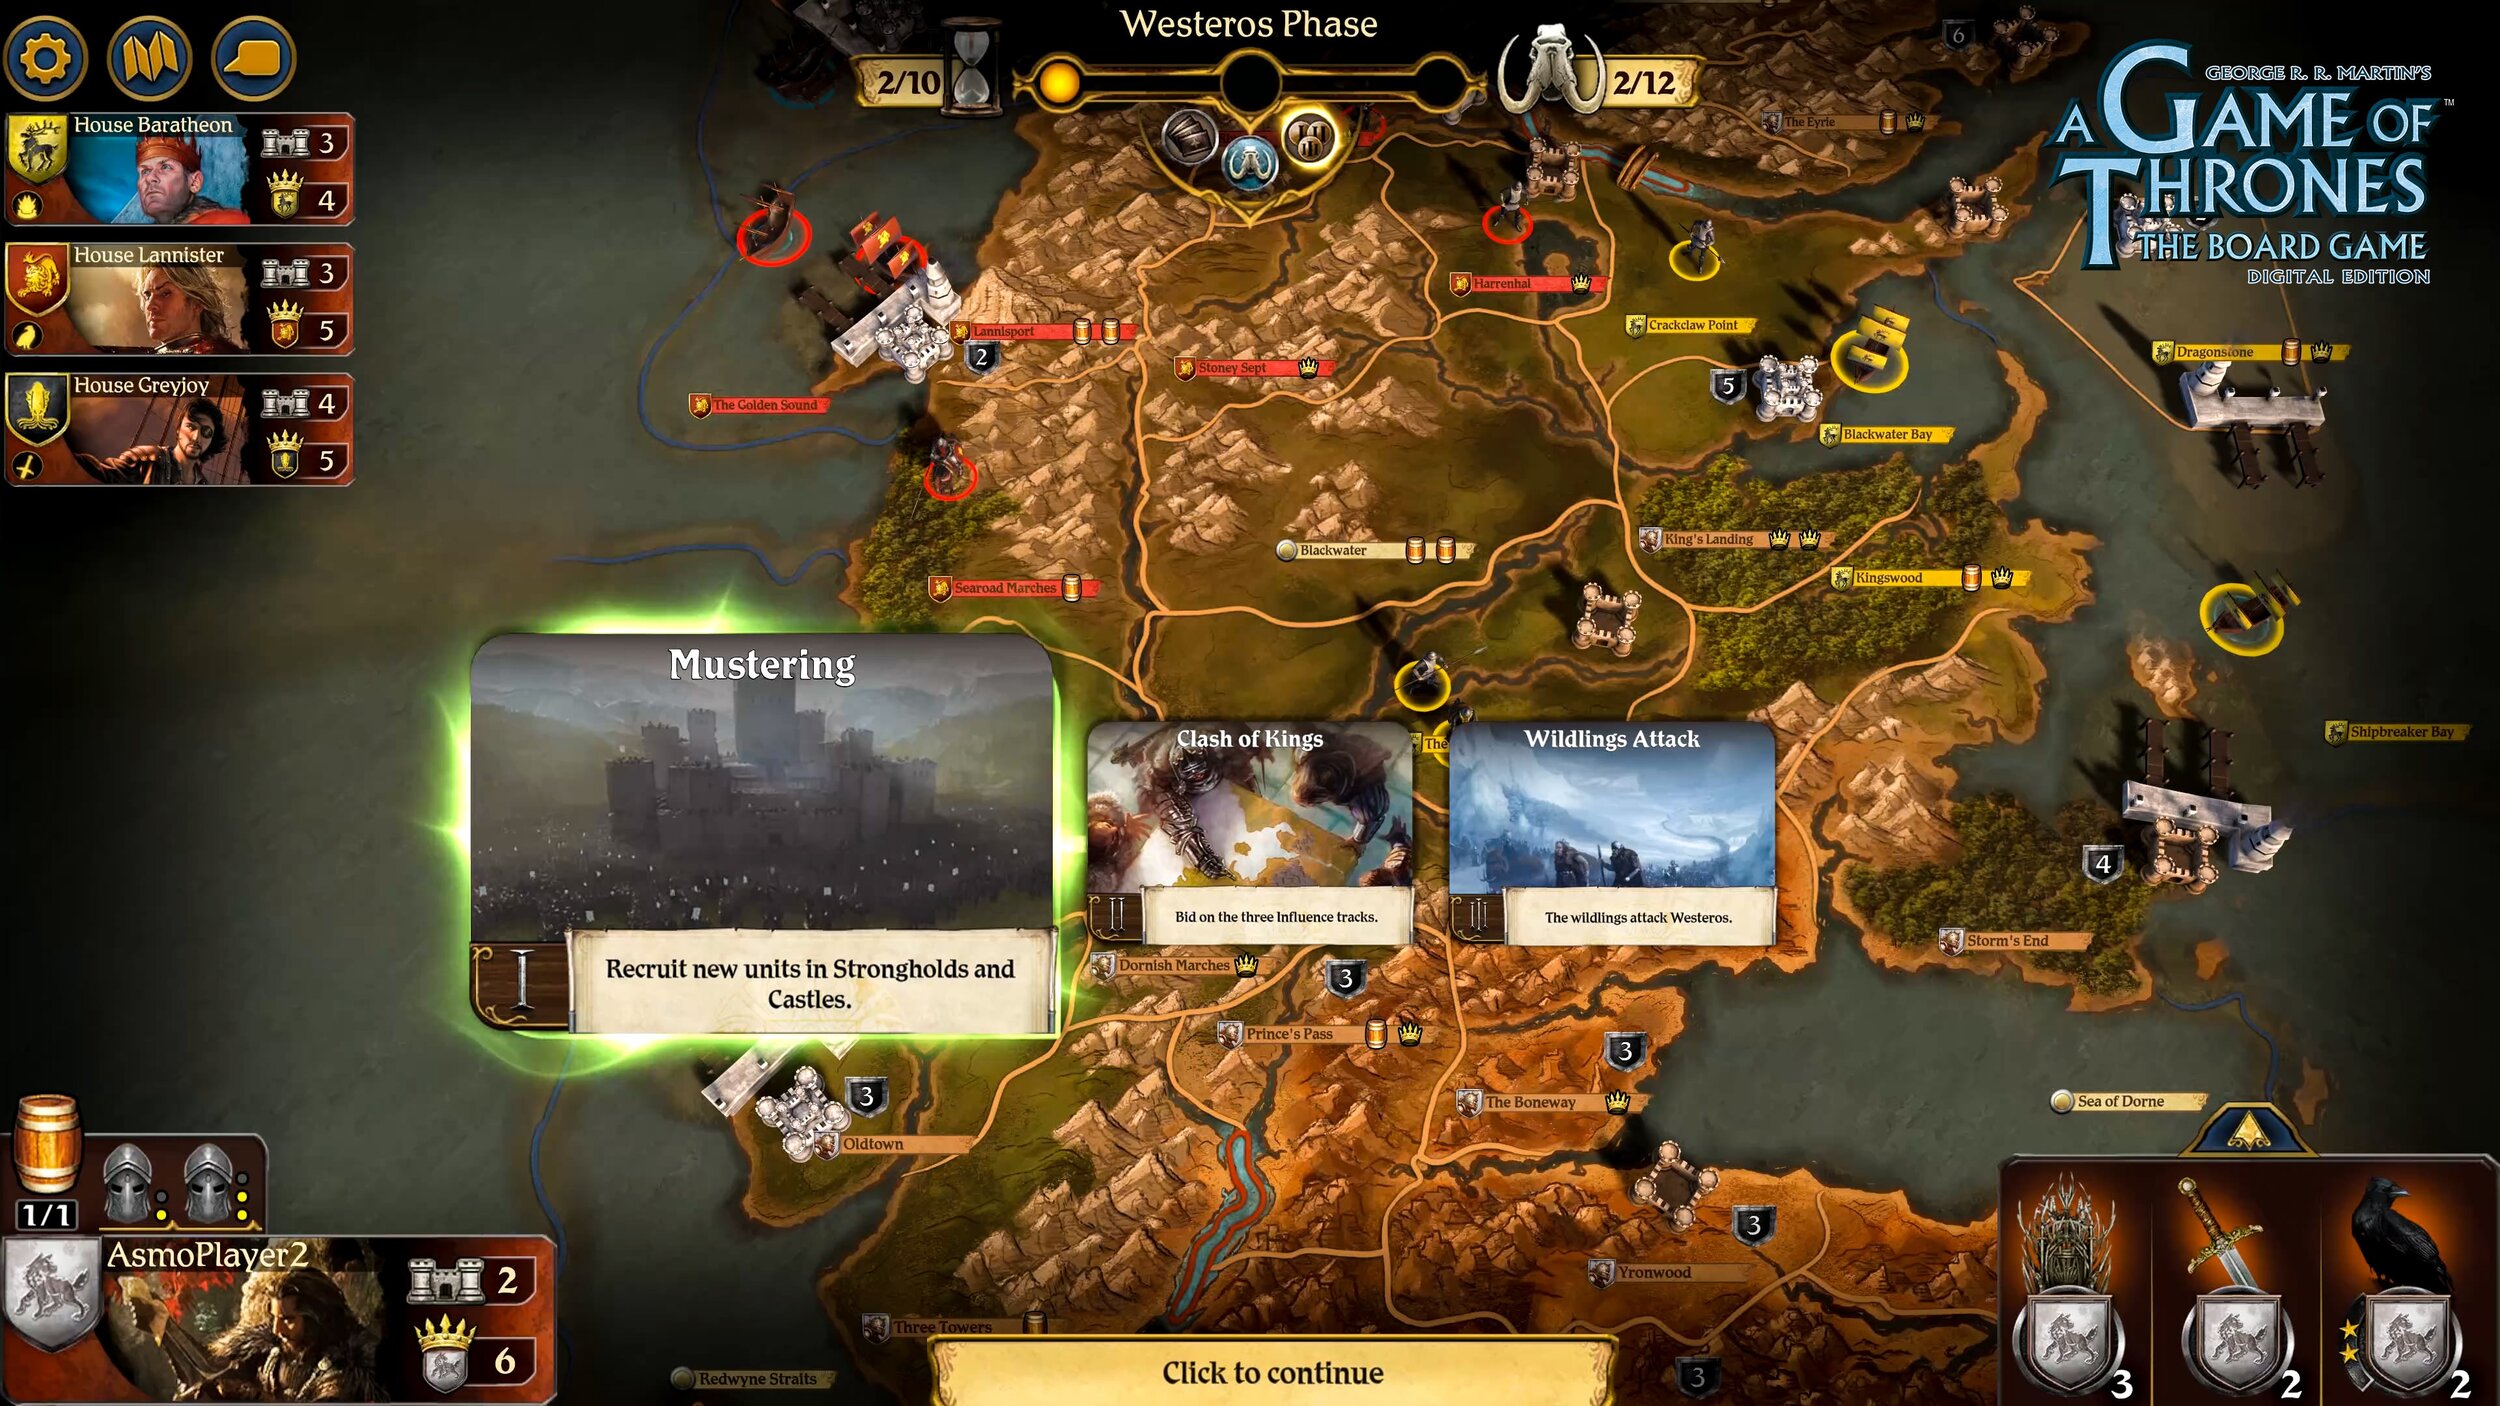 A Game of Thrones: The Board Game - Digital Edition - Screenshot 4.jpg